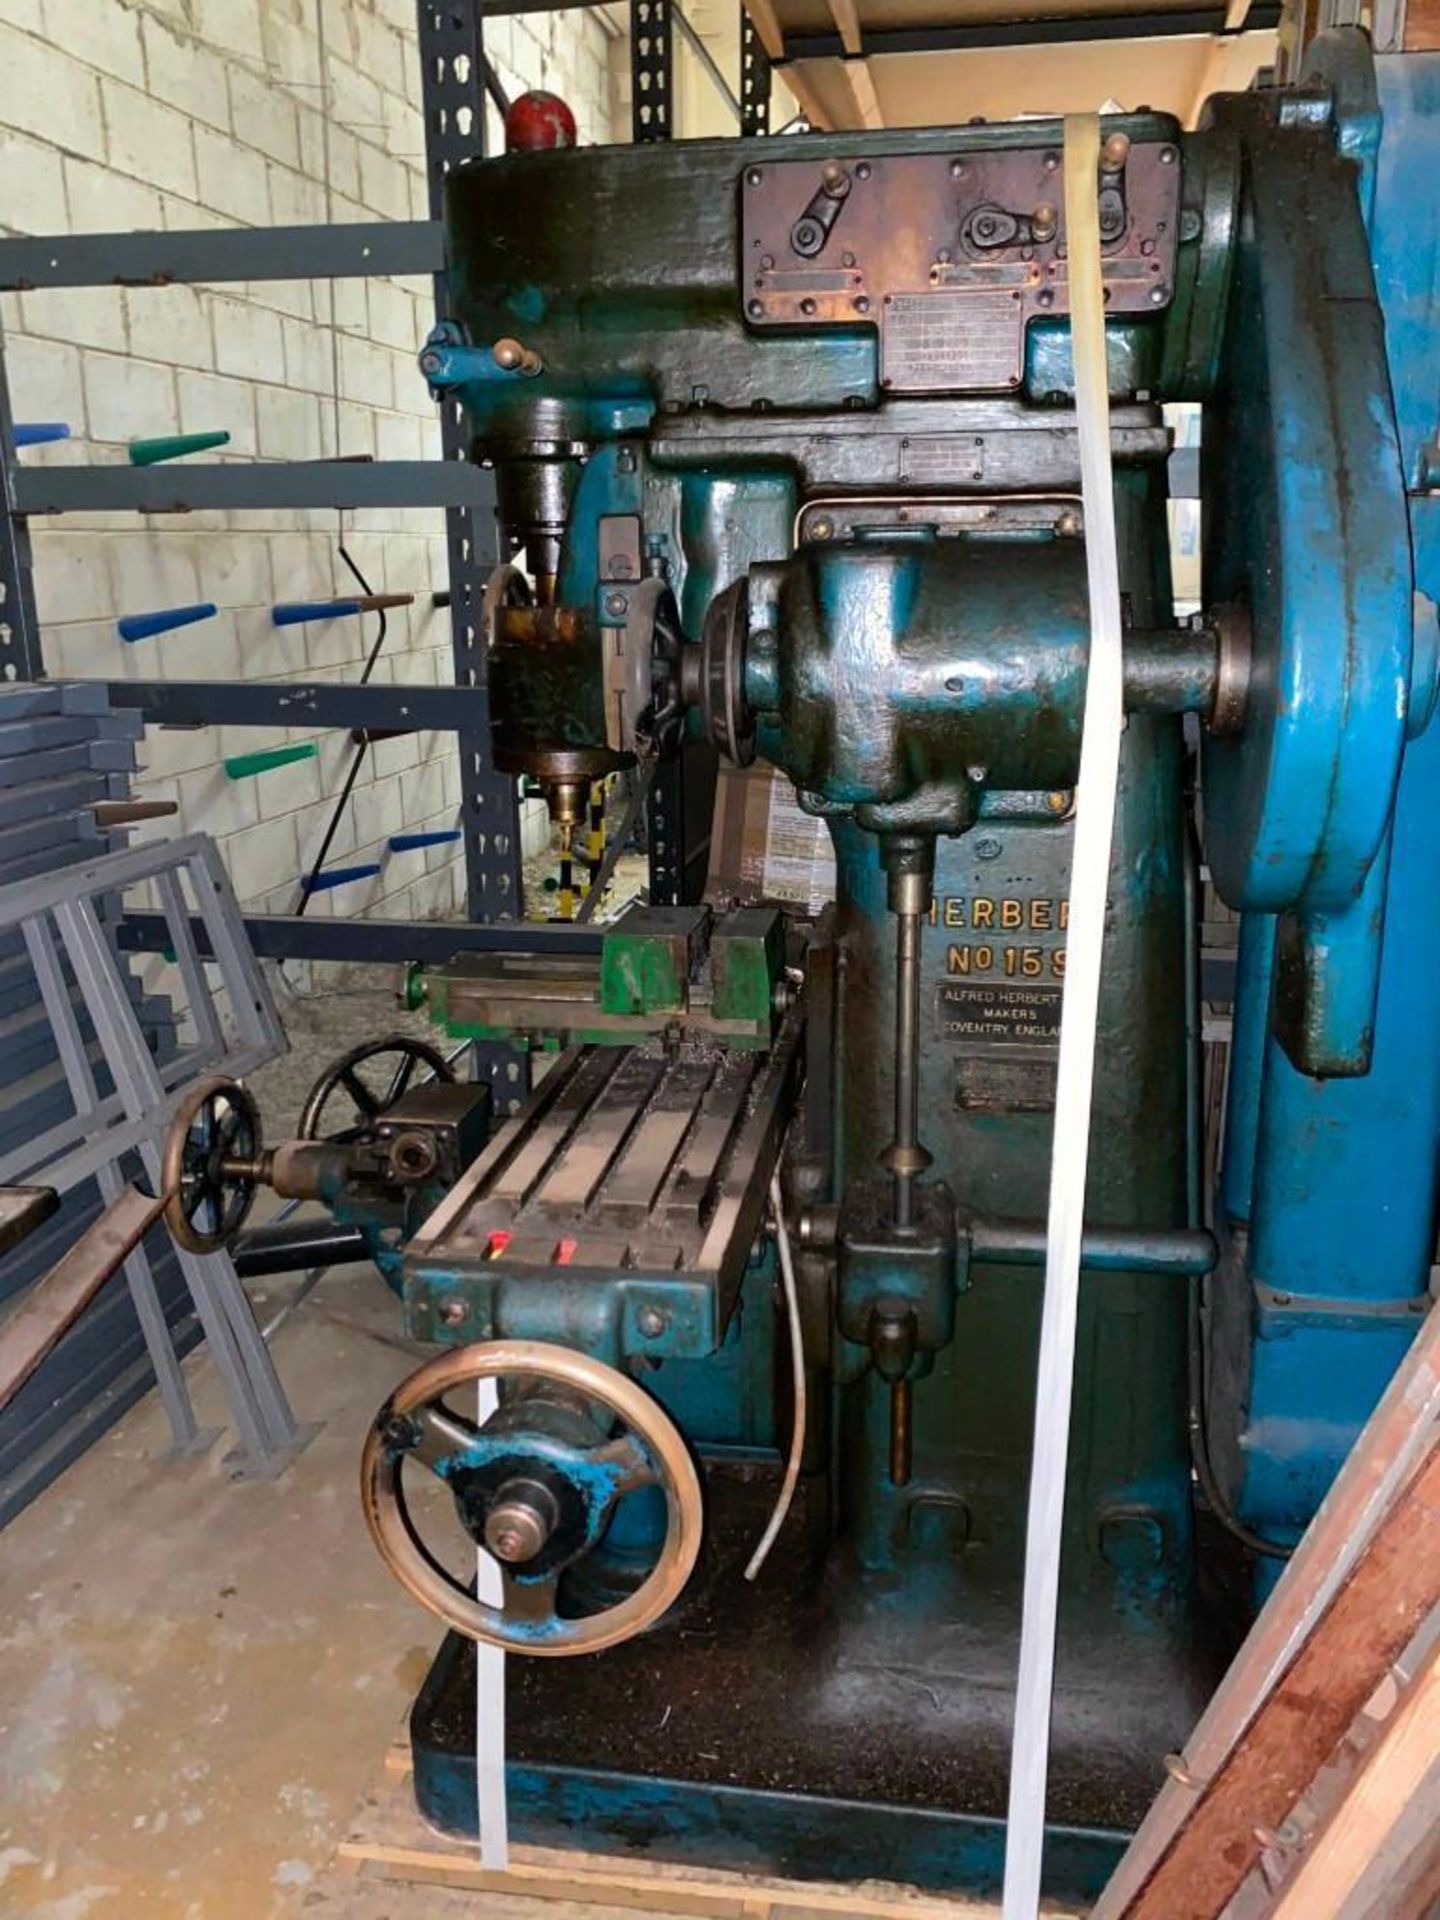 Herbert Milling Machine